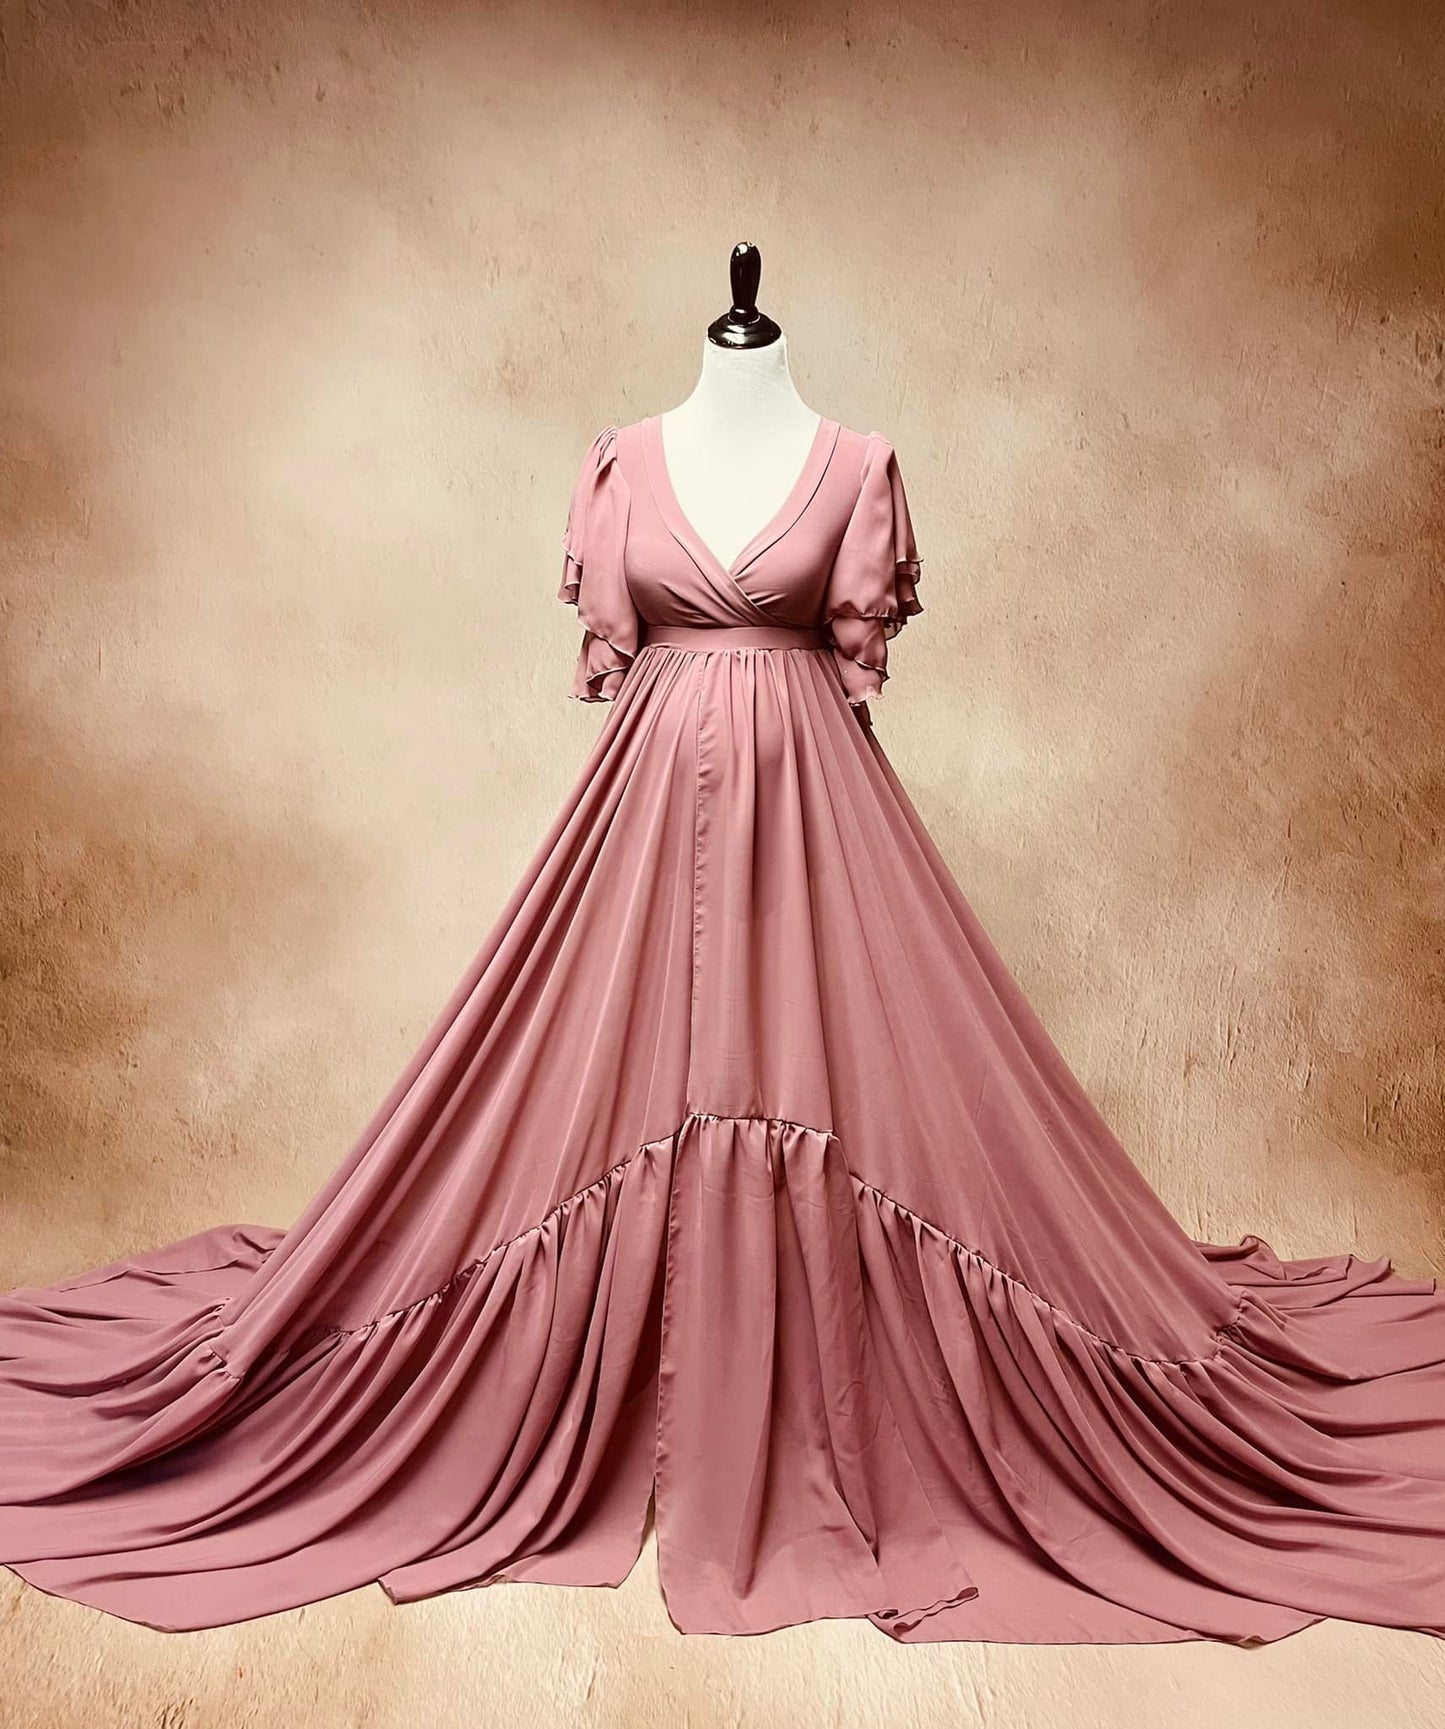 Mauve Pink Tallulah Gown - maternity photoshoot dress